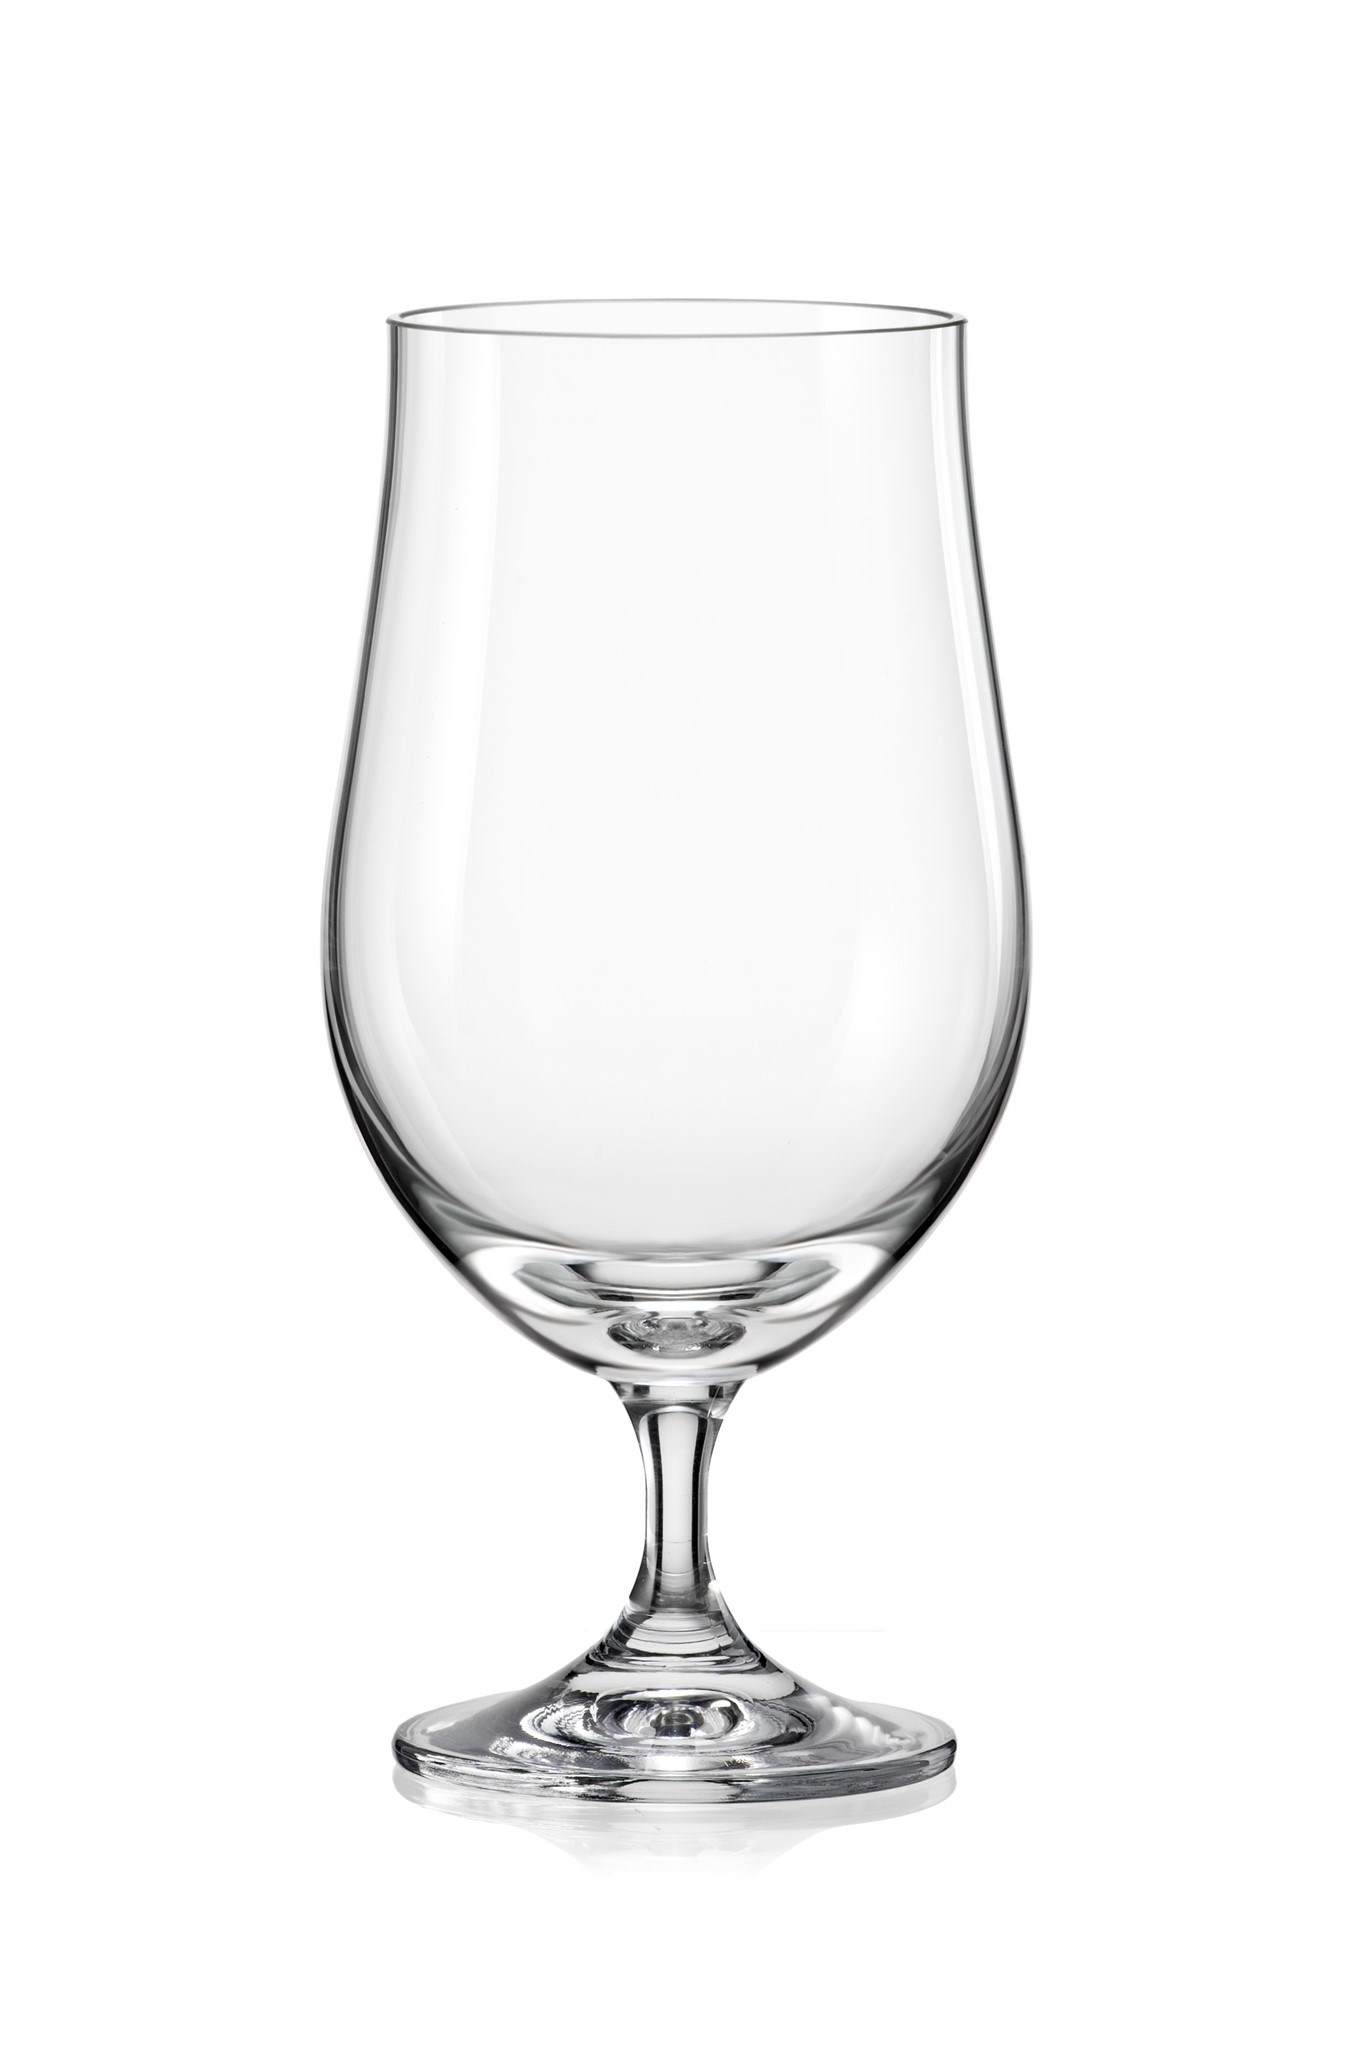 BAR Tulip Beer Glasses | Set of 4